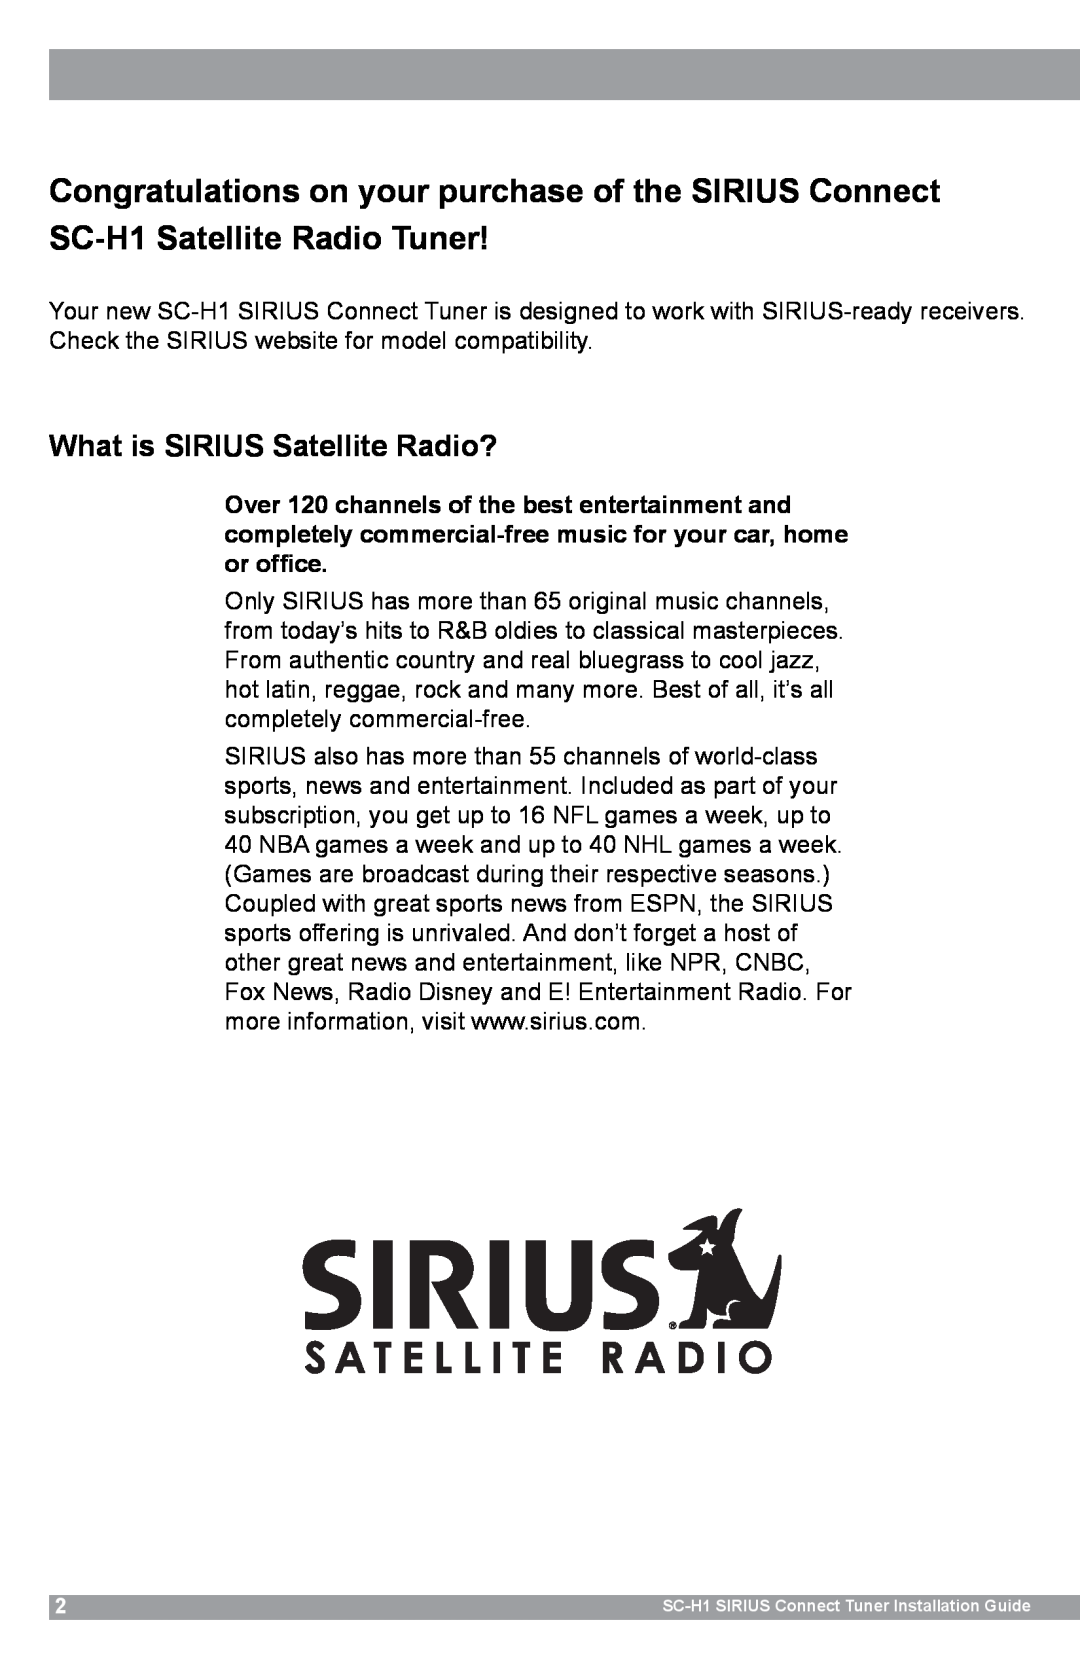 Sirius Satellite Radio SCH1 manual What is SIRIUS Satellite Radio? 